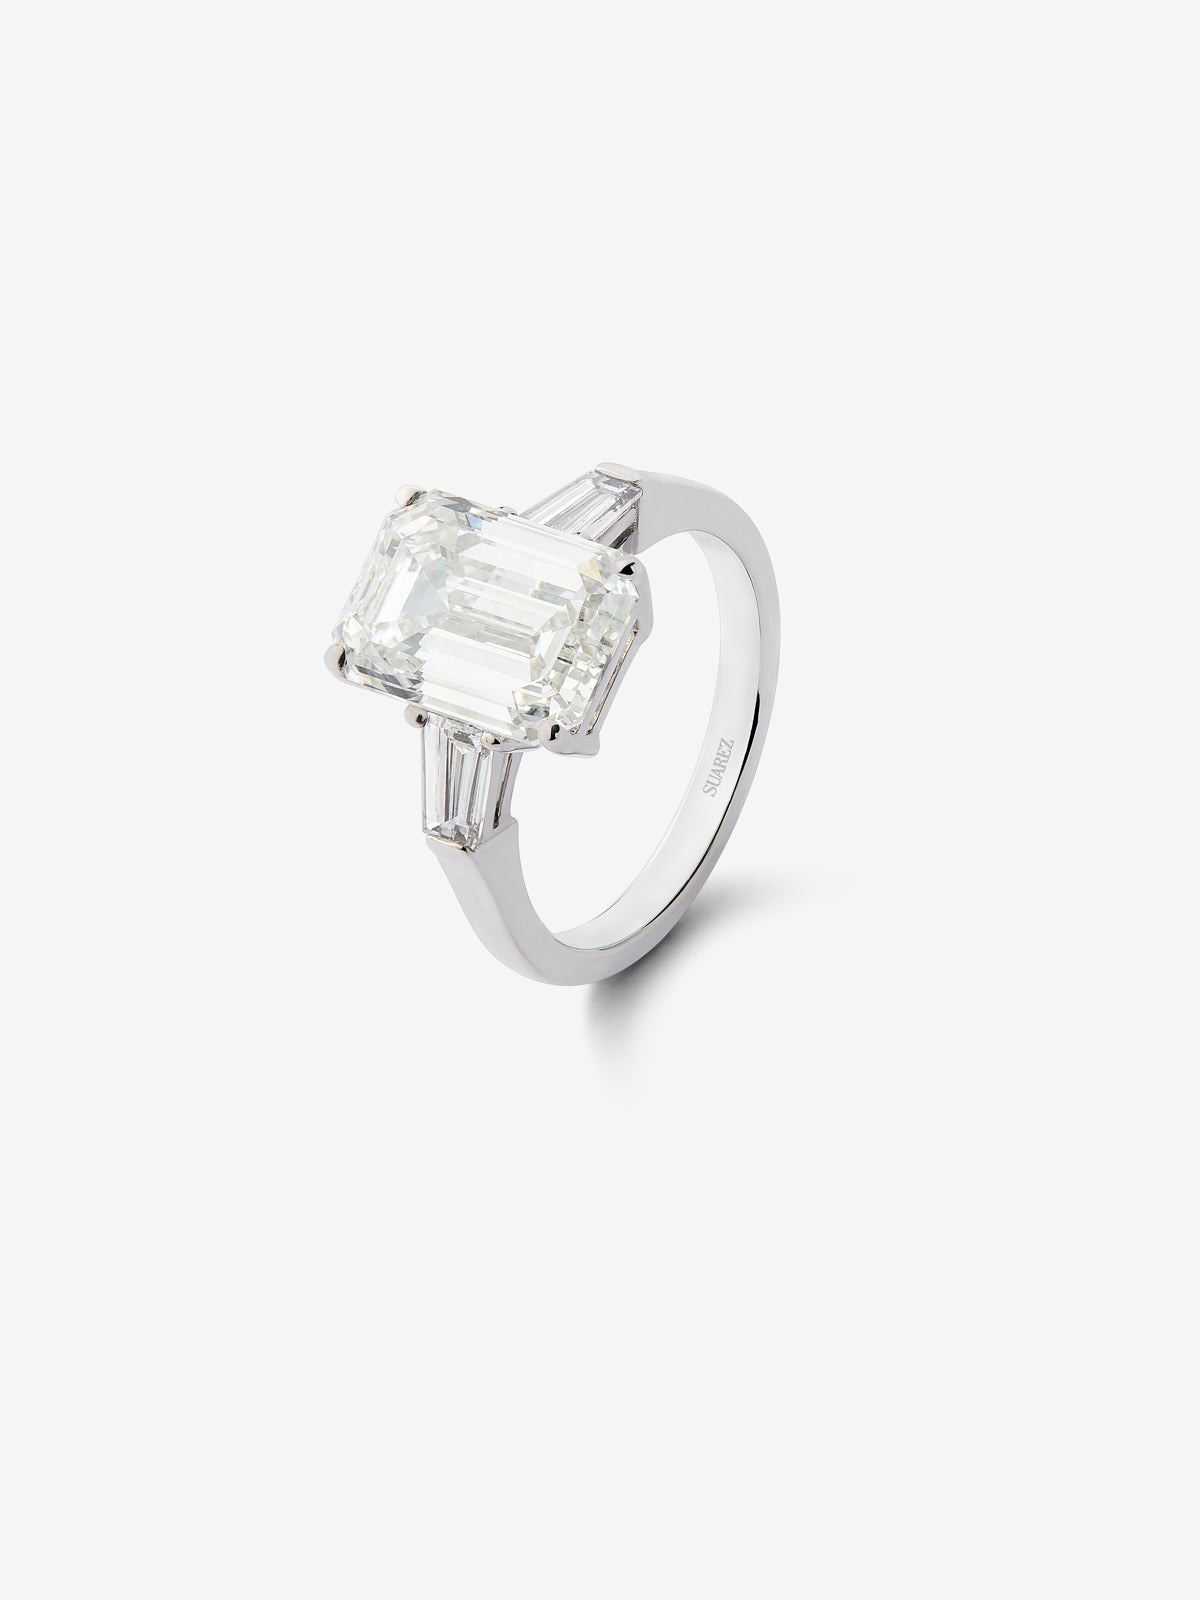 18K white gold triple ring with 5.03 ct emerald cut diamonds and 0.6 ct trapezoid cut diamonds